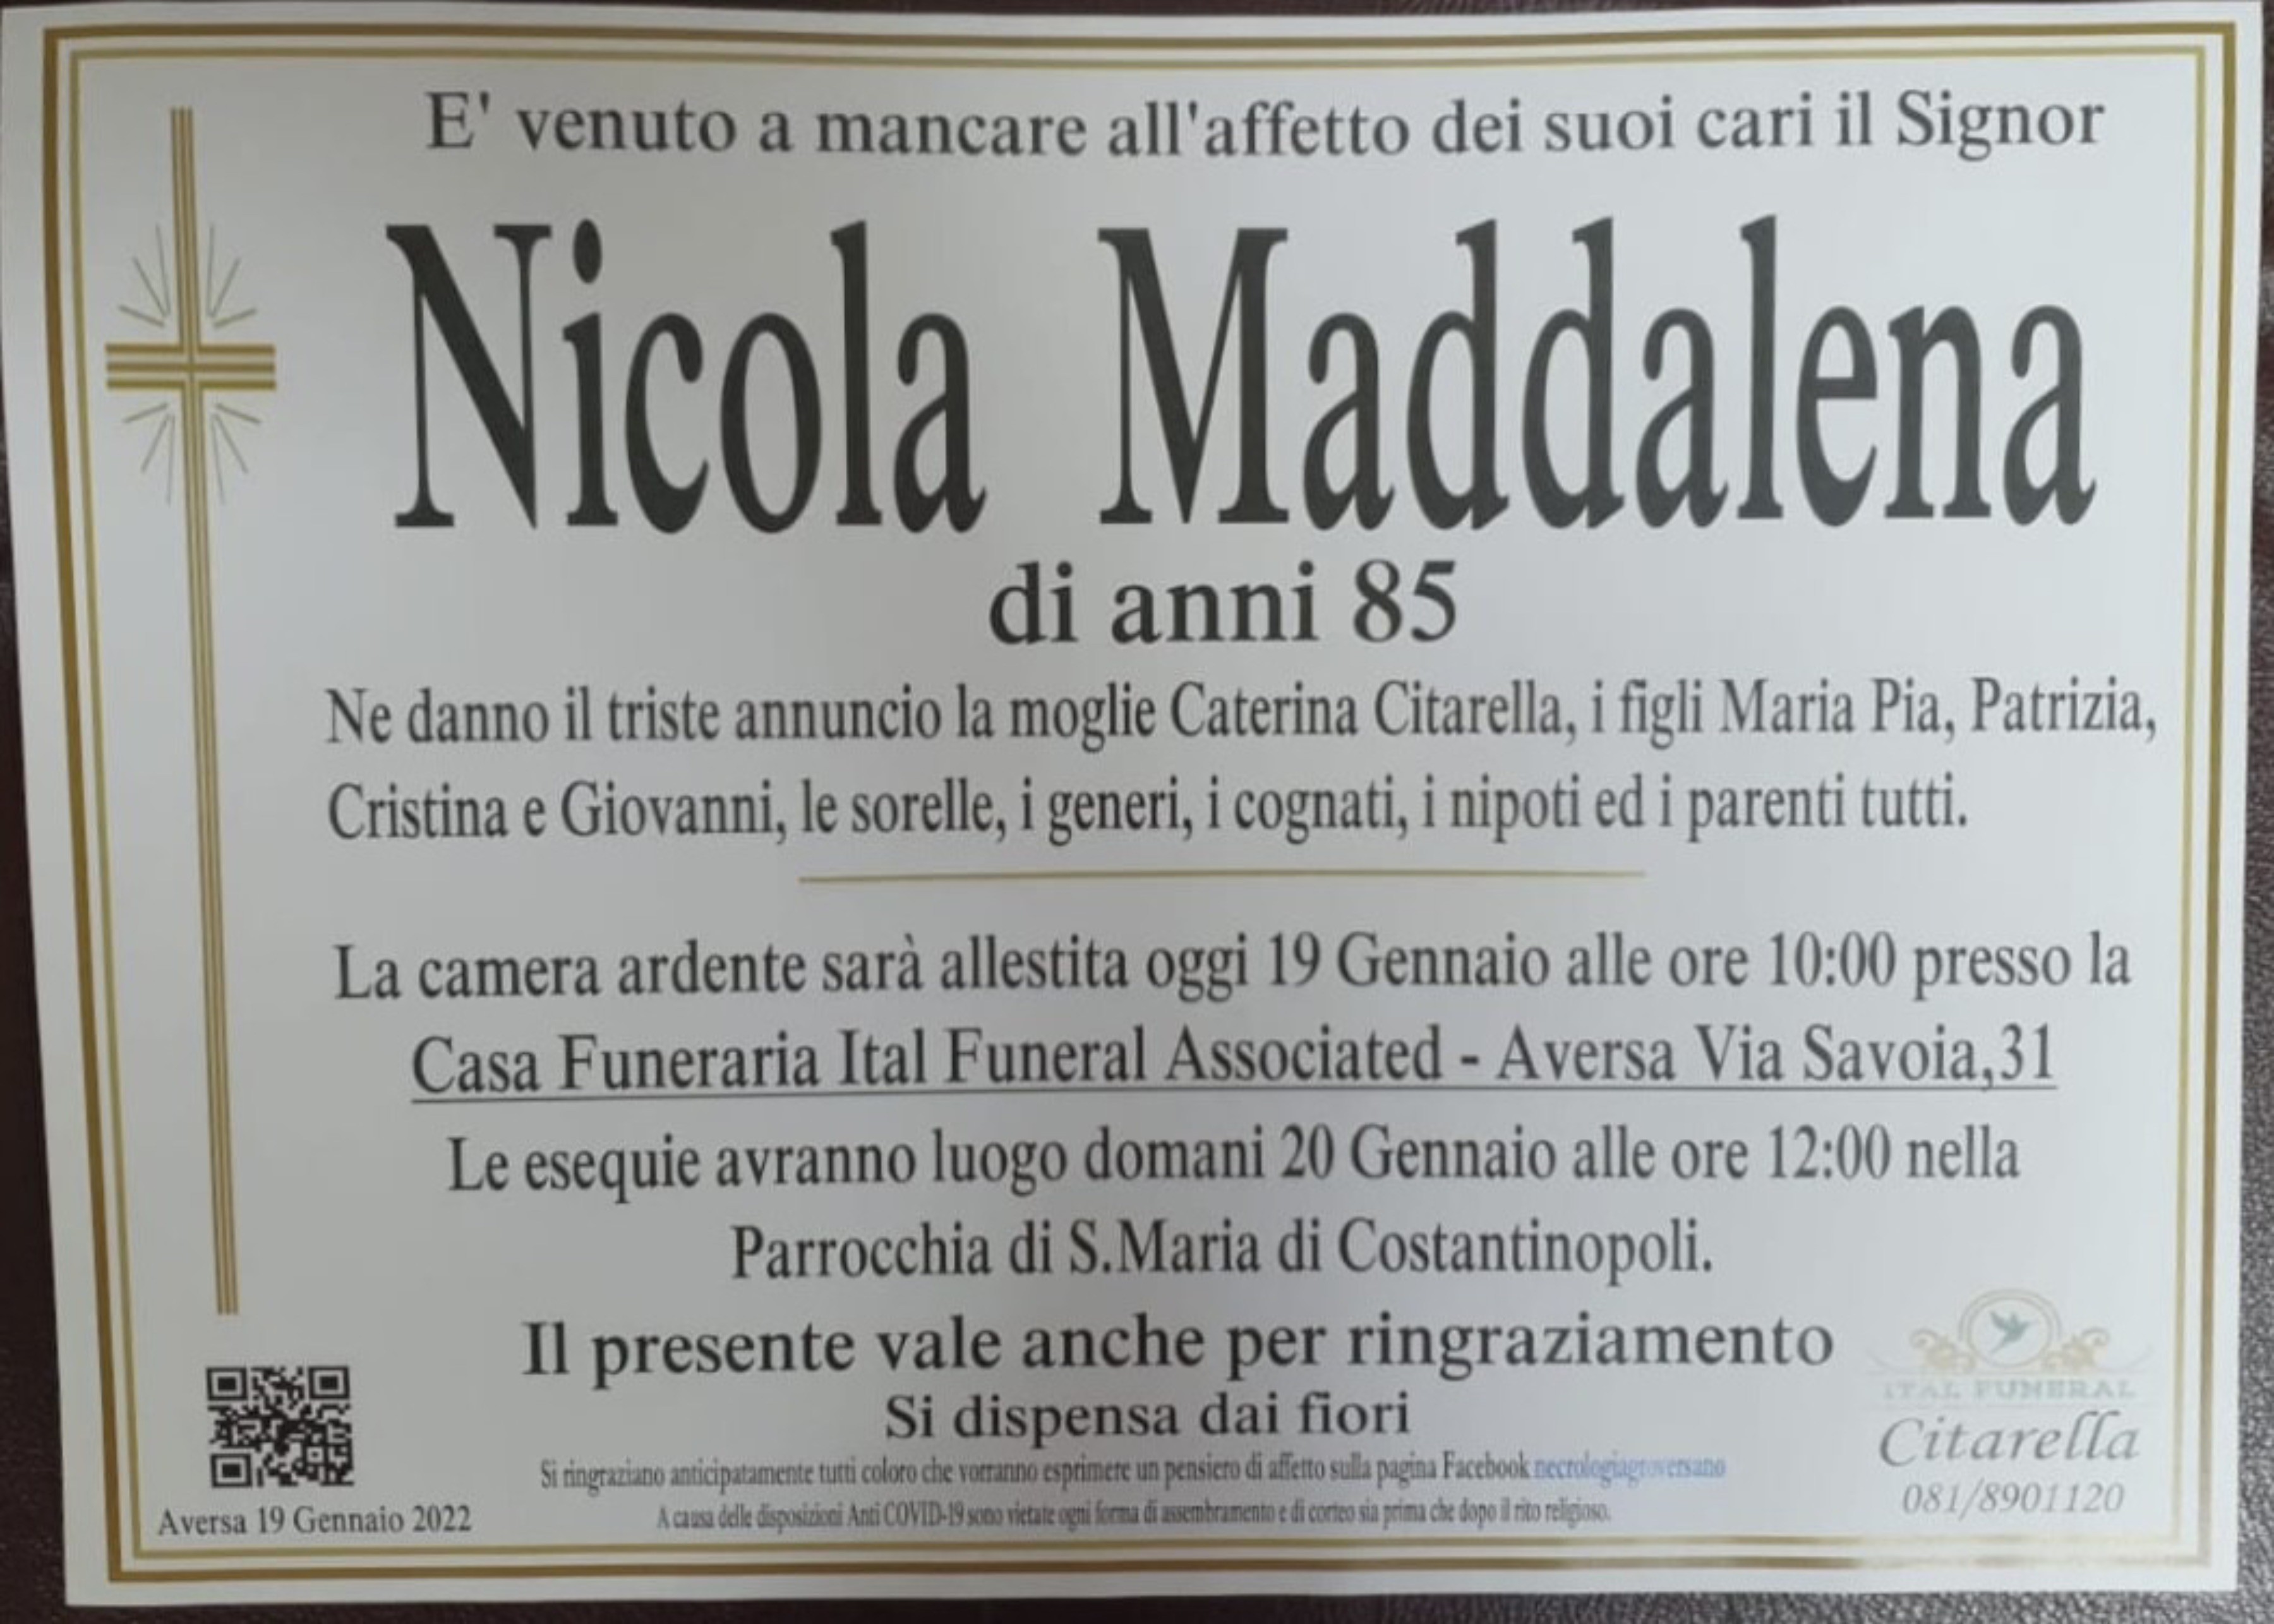 Nicola Maddalena